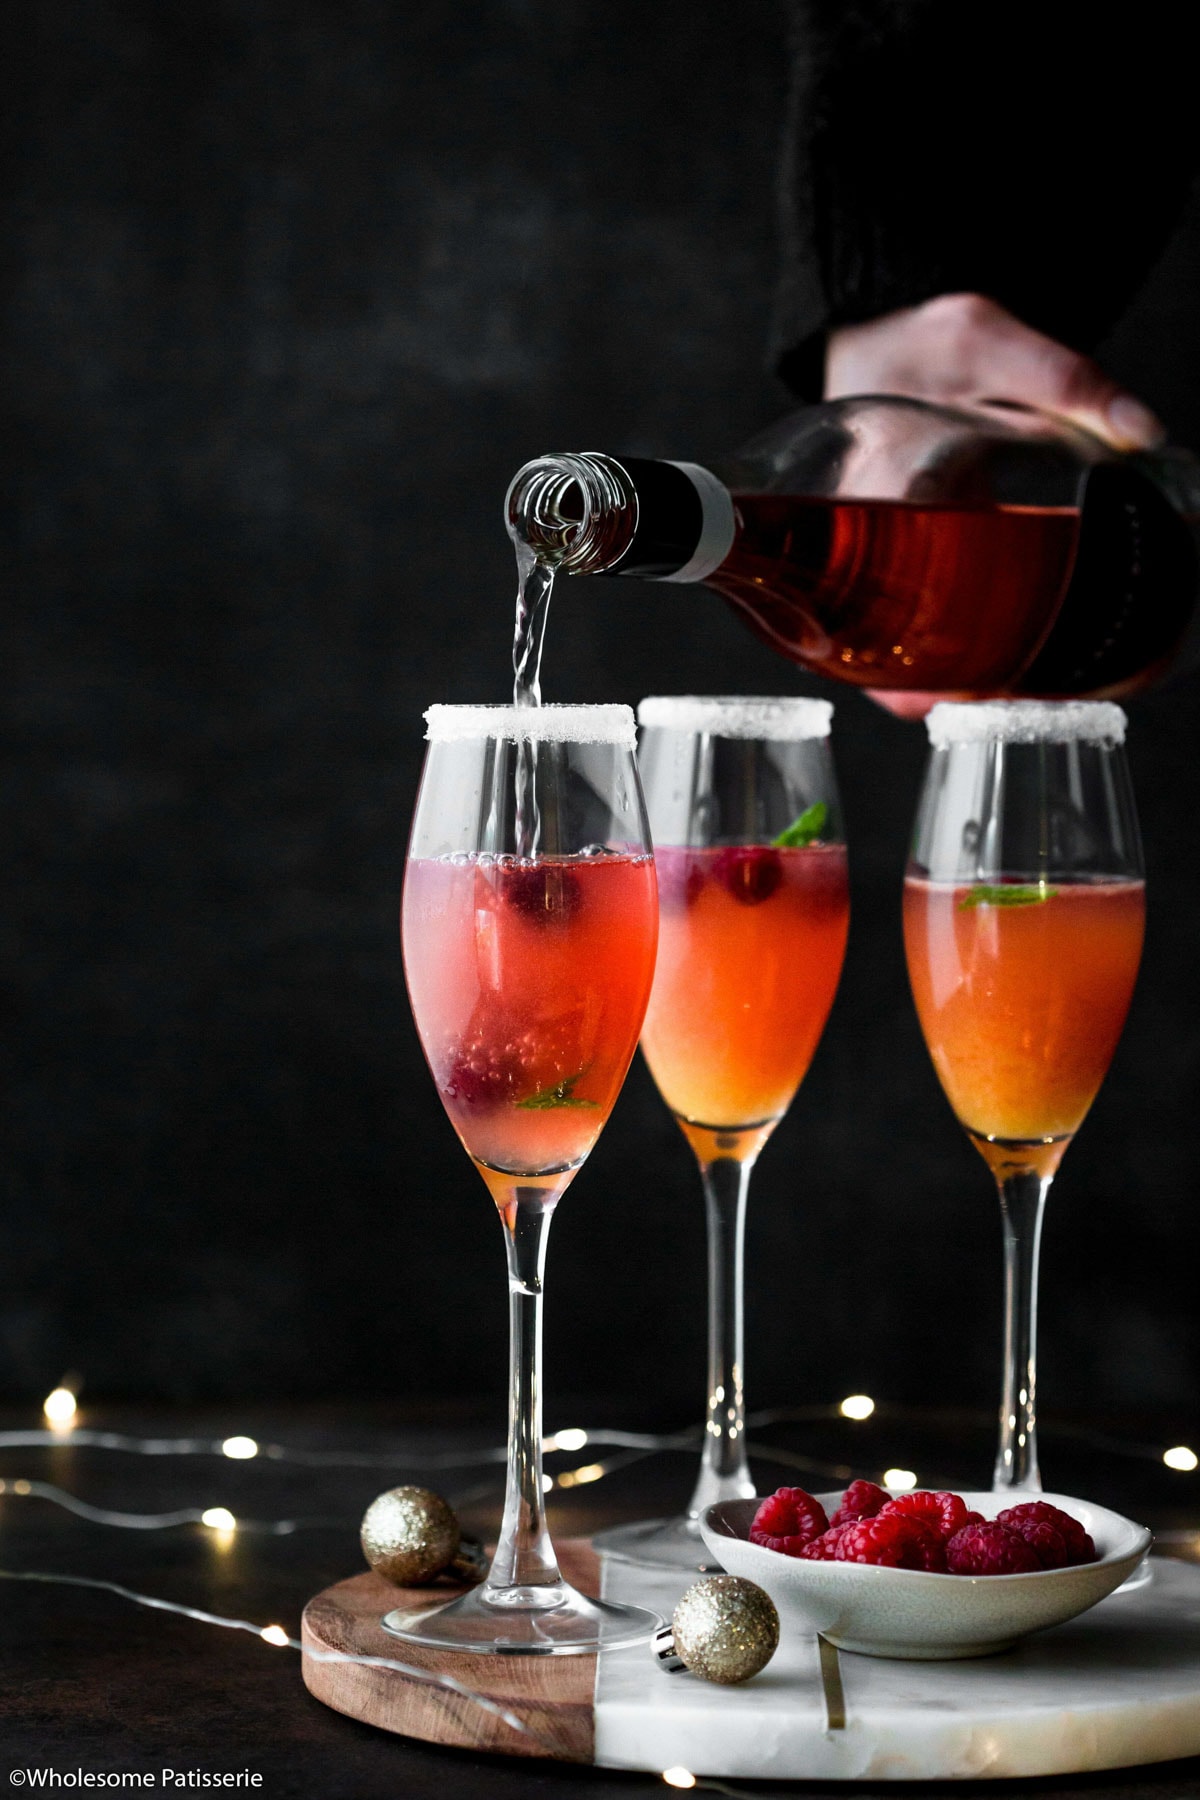 Orange juice and rosé in wine glasses.